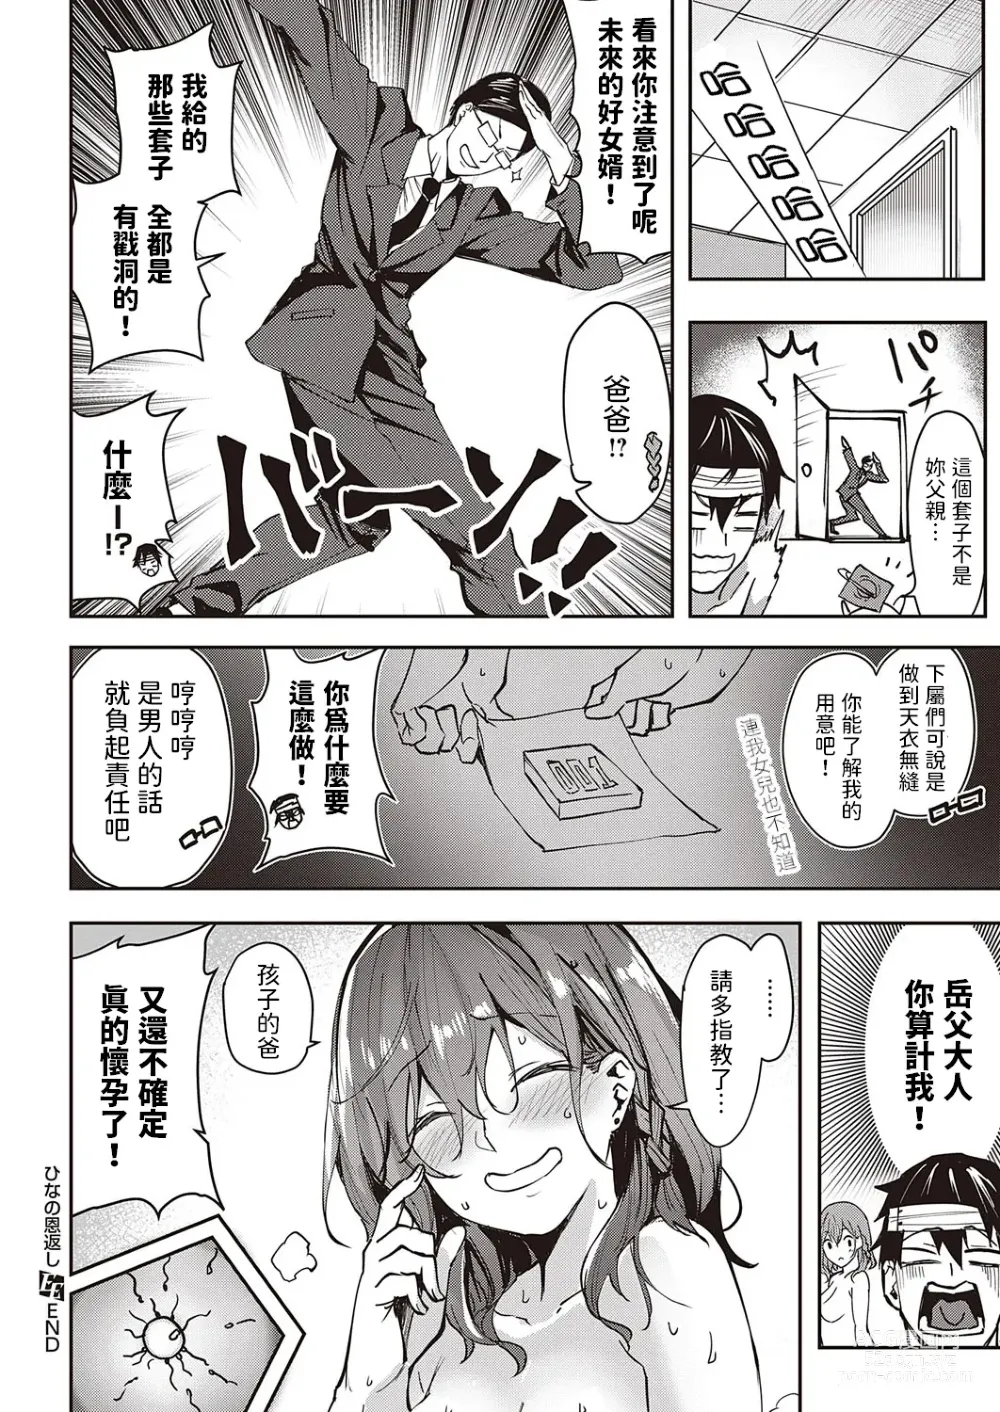 Page 24 of manga Hina no Ongaeshi